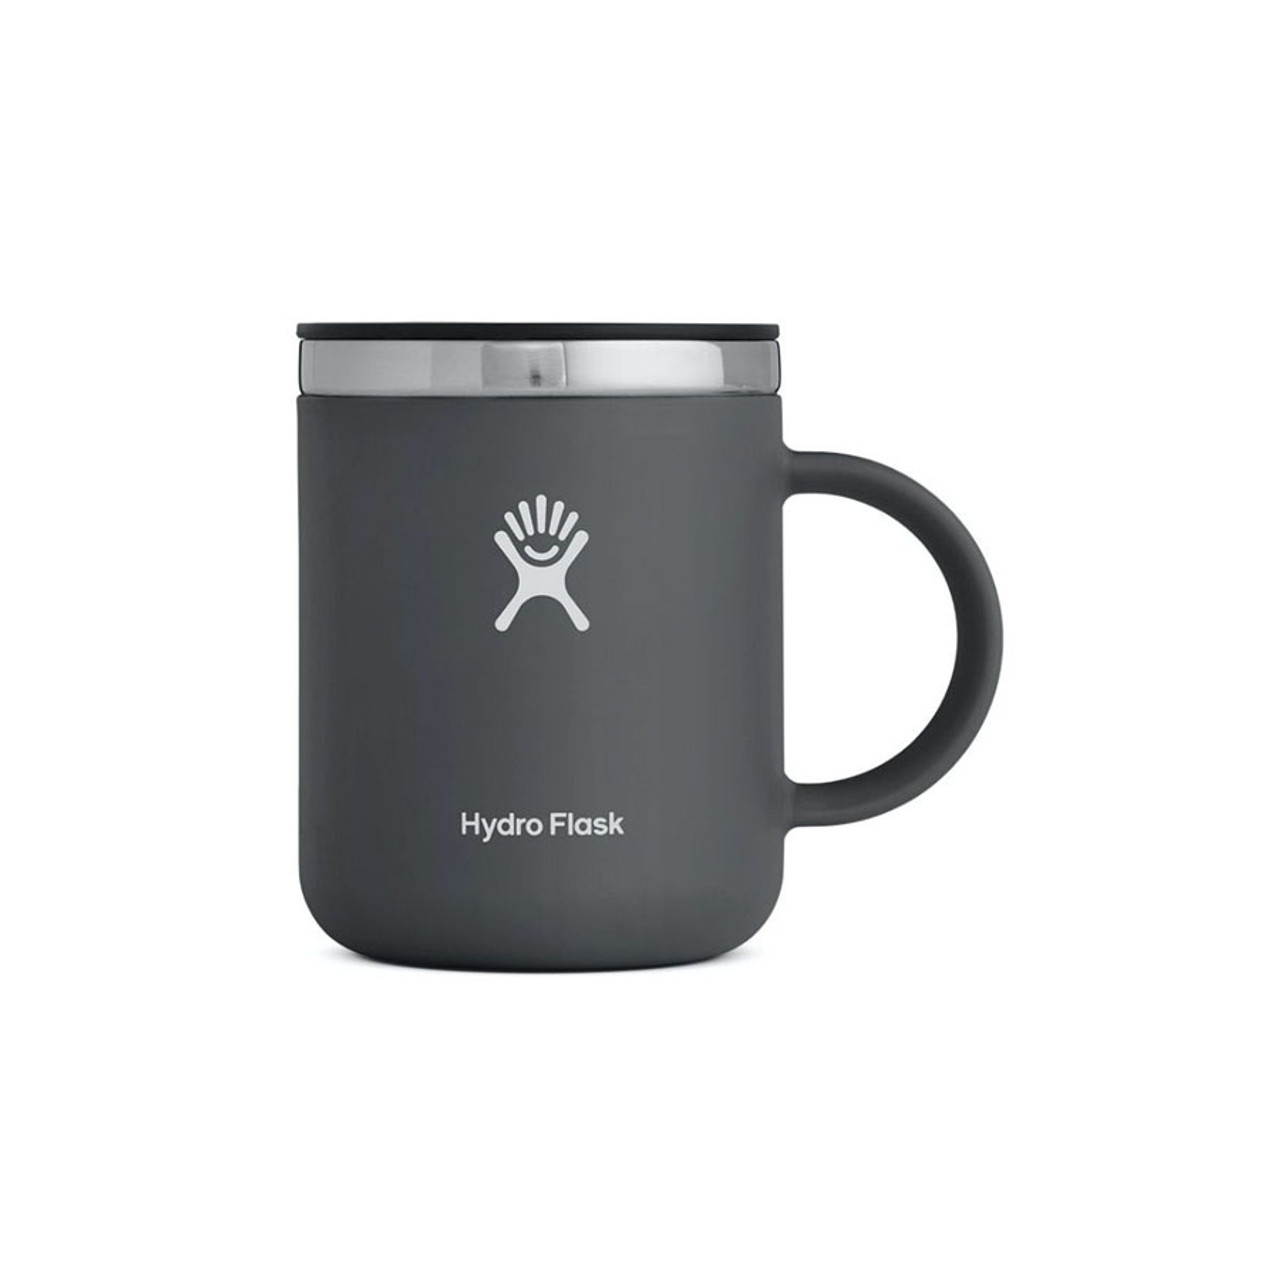  Hydro Flask Vacuum Coffee Mug - 12 oz. - 24 hr